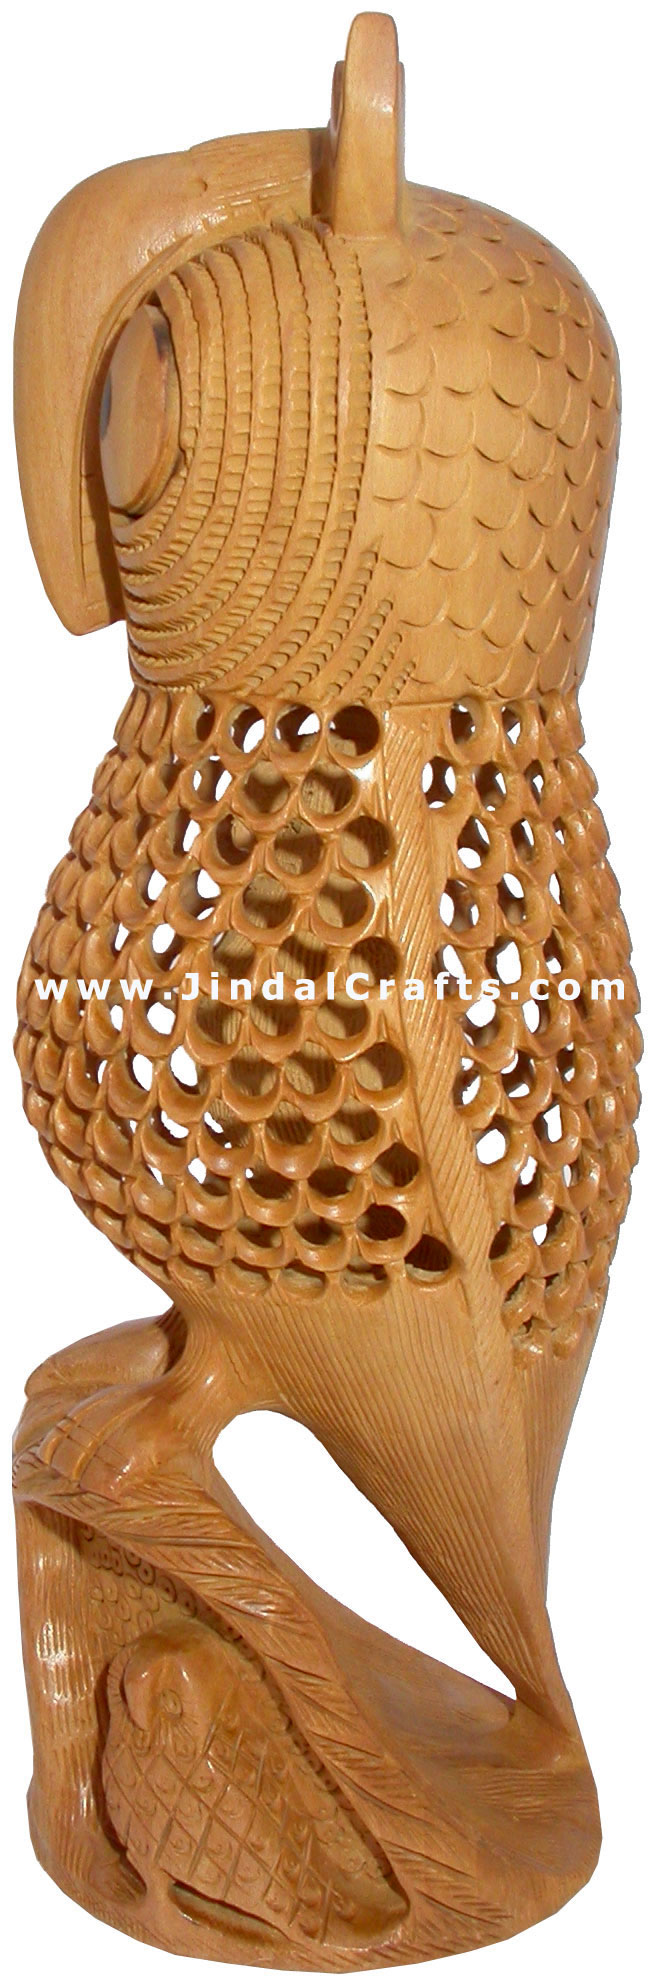 Handmade Wood Sculpture Hollow Owl Indian Carving Craft Jalli Engraving Figures